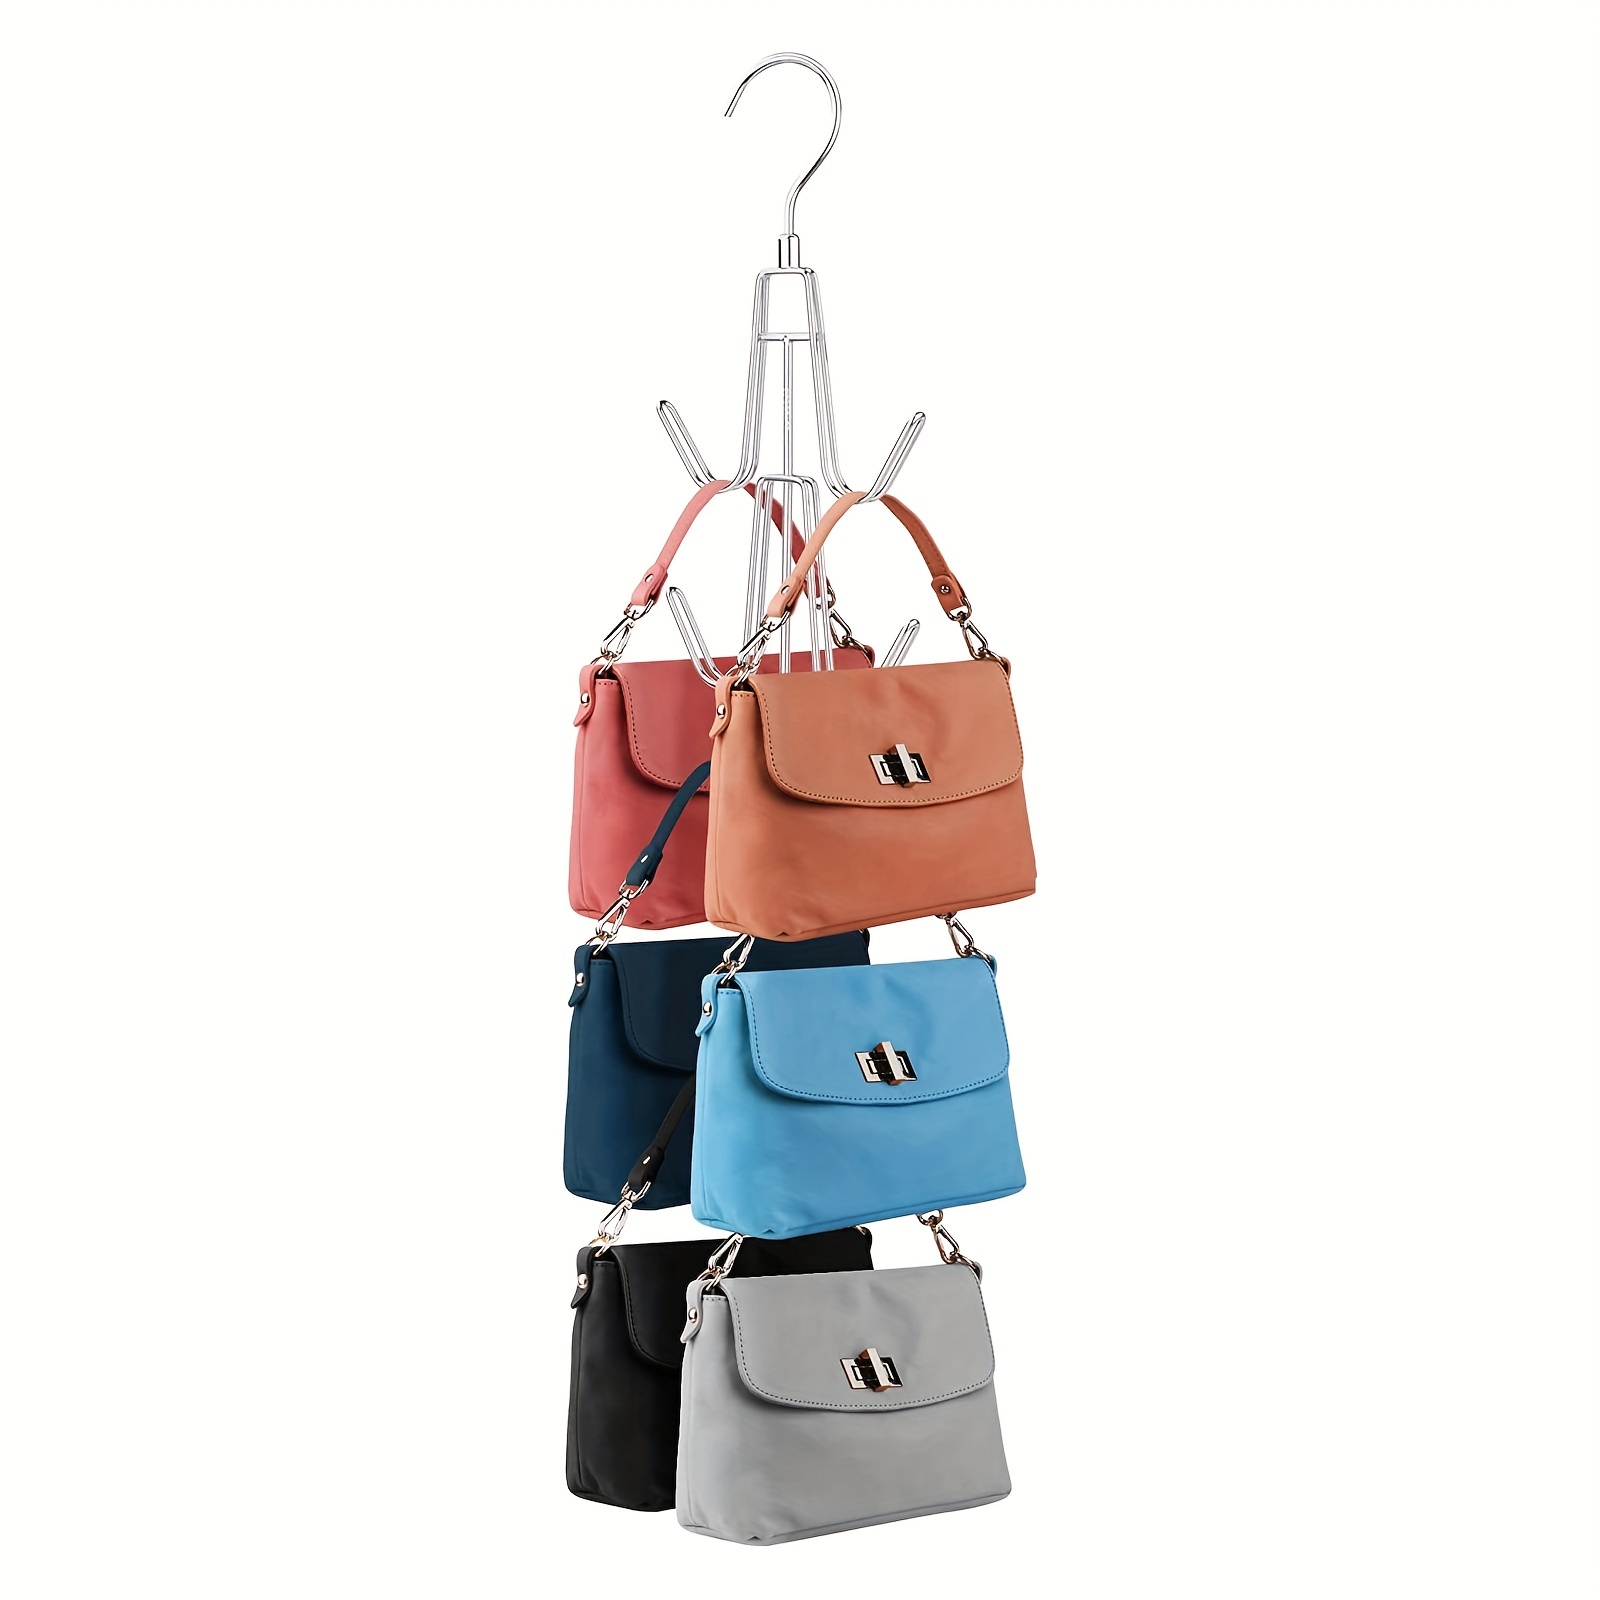 Purse Hanger Hook Wardrobe Bag, Hanging Handbag Organizer